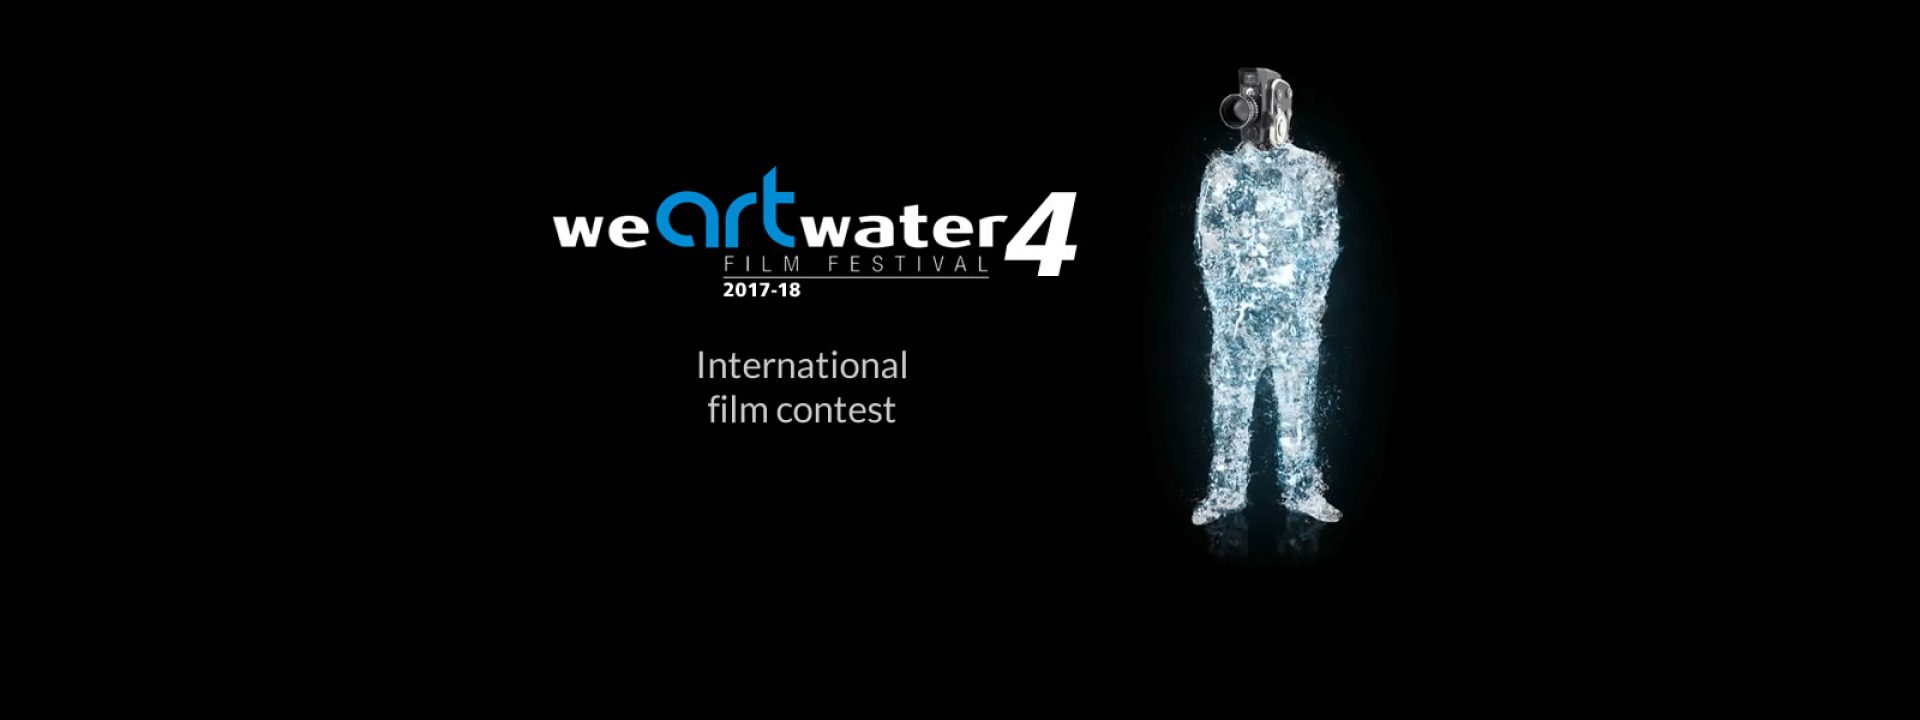 The We Art Water Film Festival 4 has broken all records